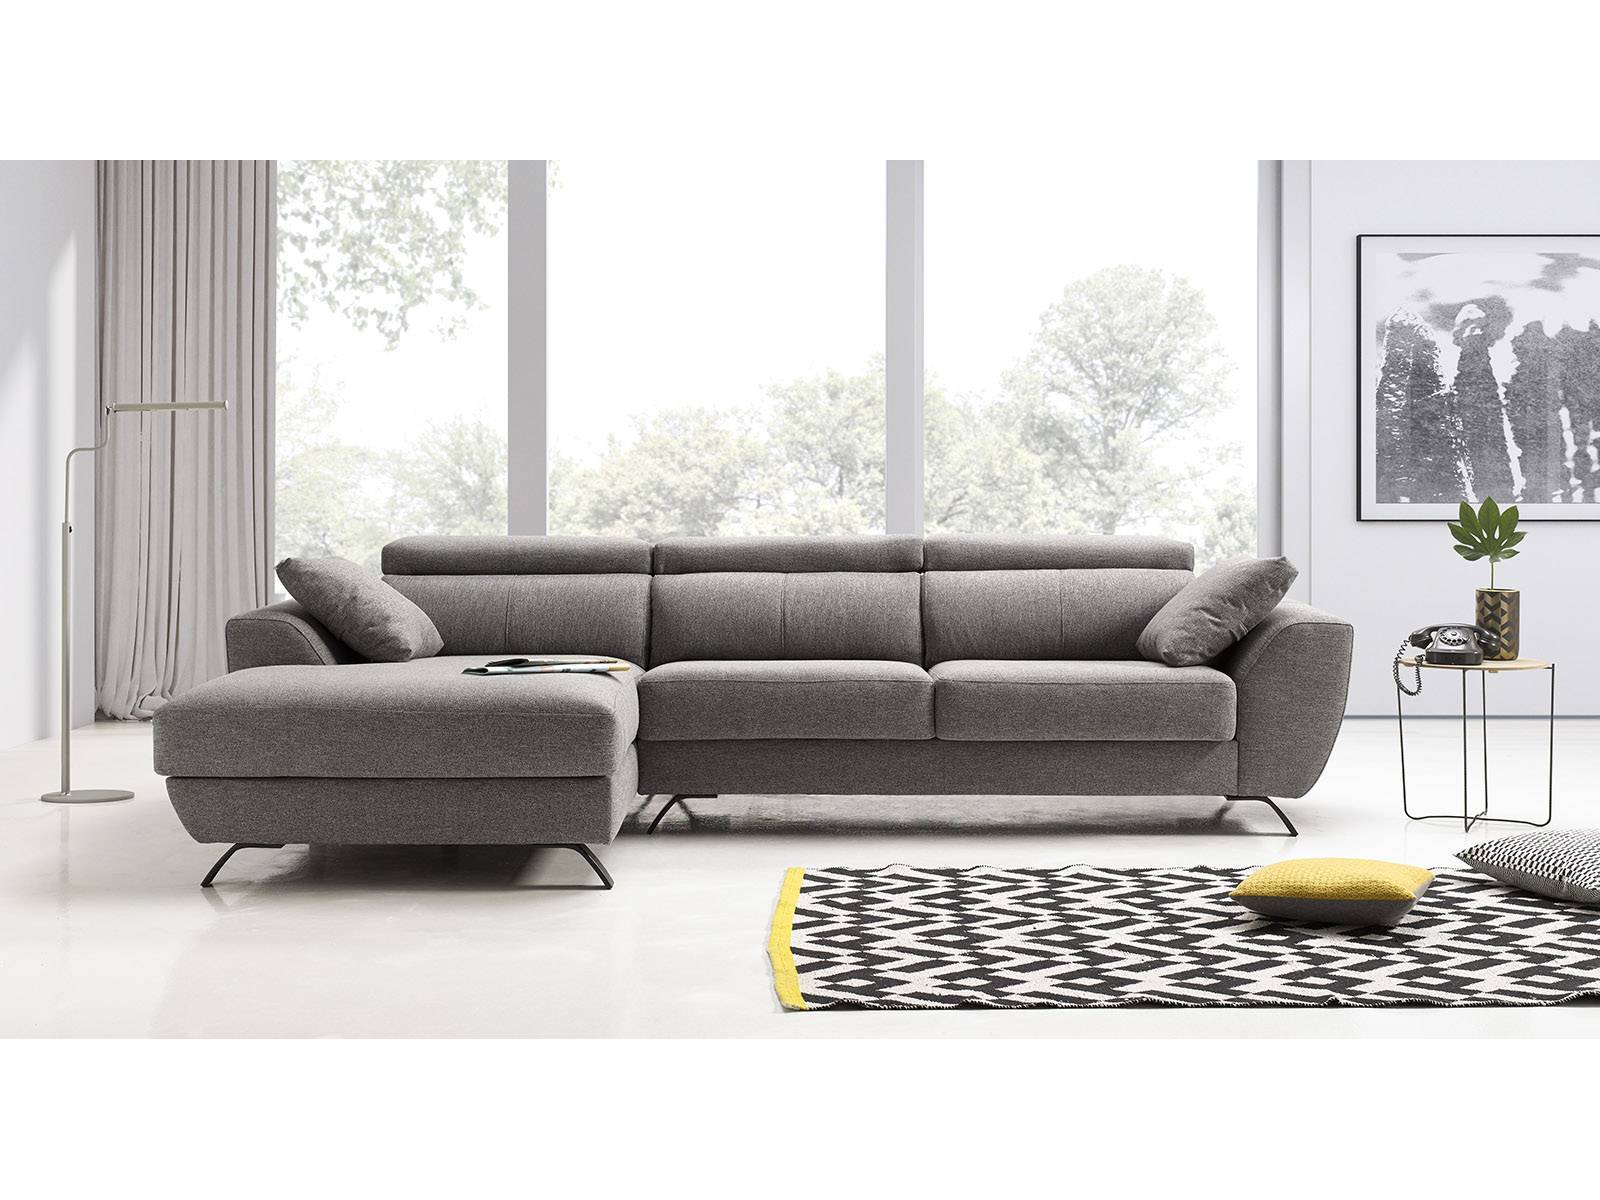 Alternativa al sofá Chaiselongue